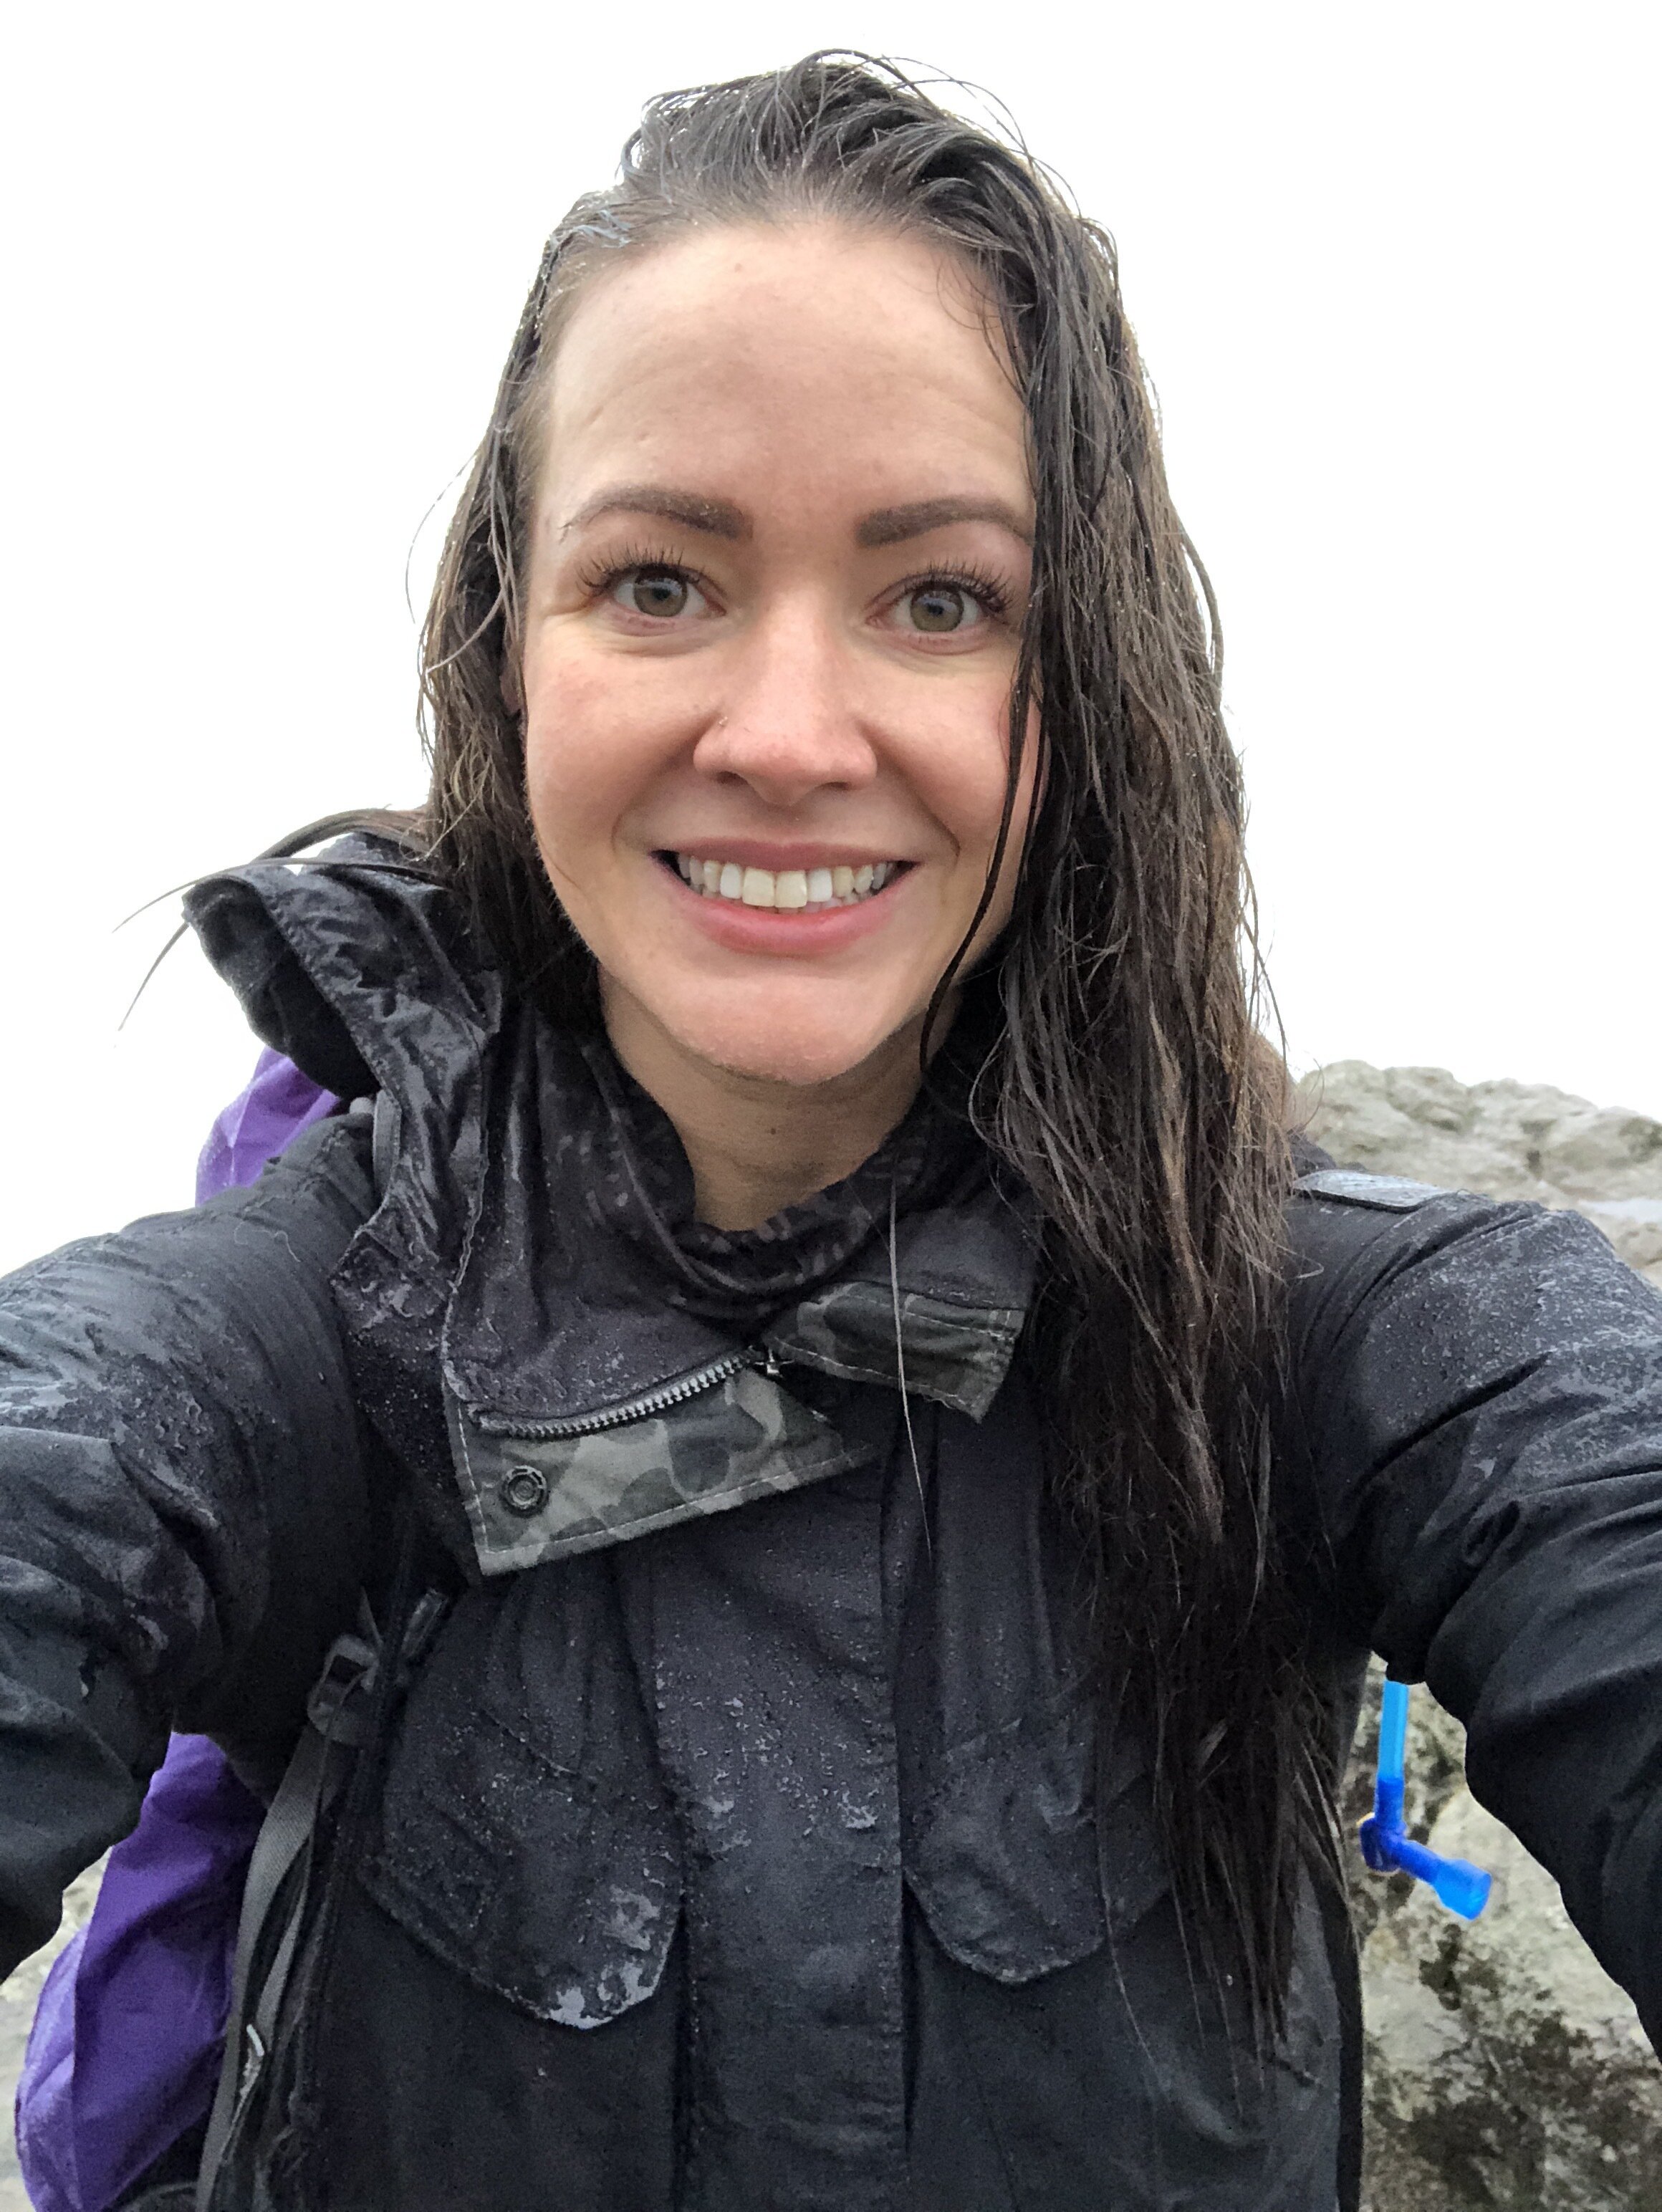  Mount Rainier wedding photographer, Jessi Cavey,&nbsp;hikes through rainy Washington weather. 